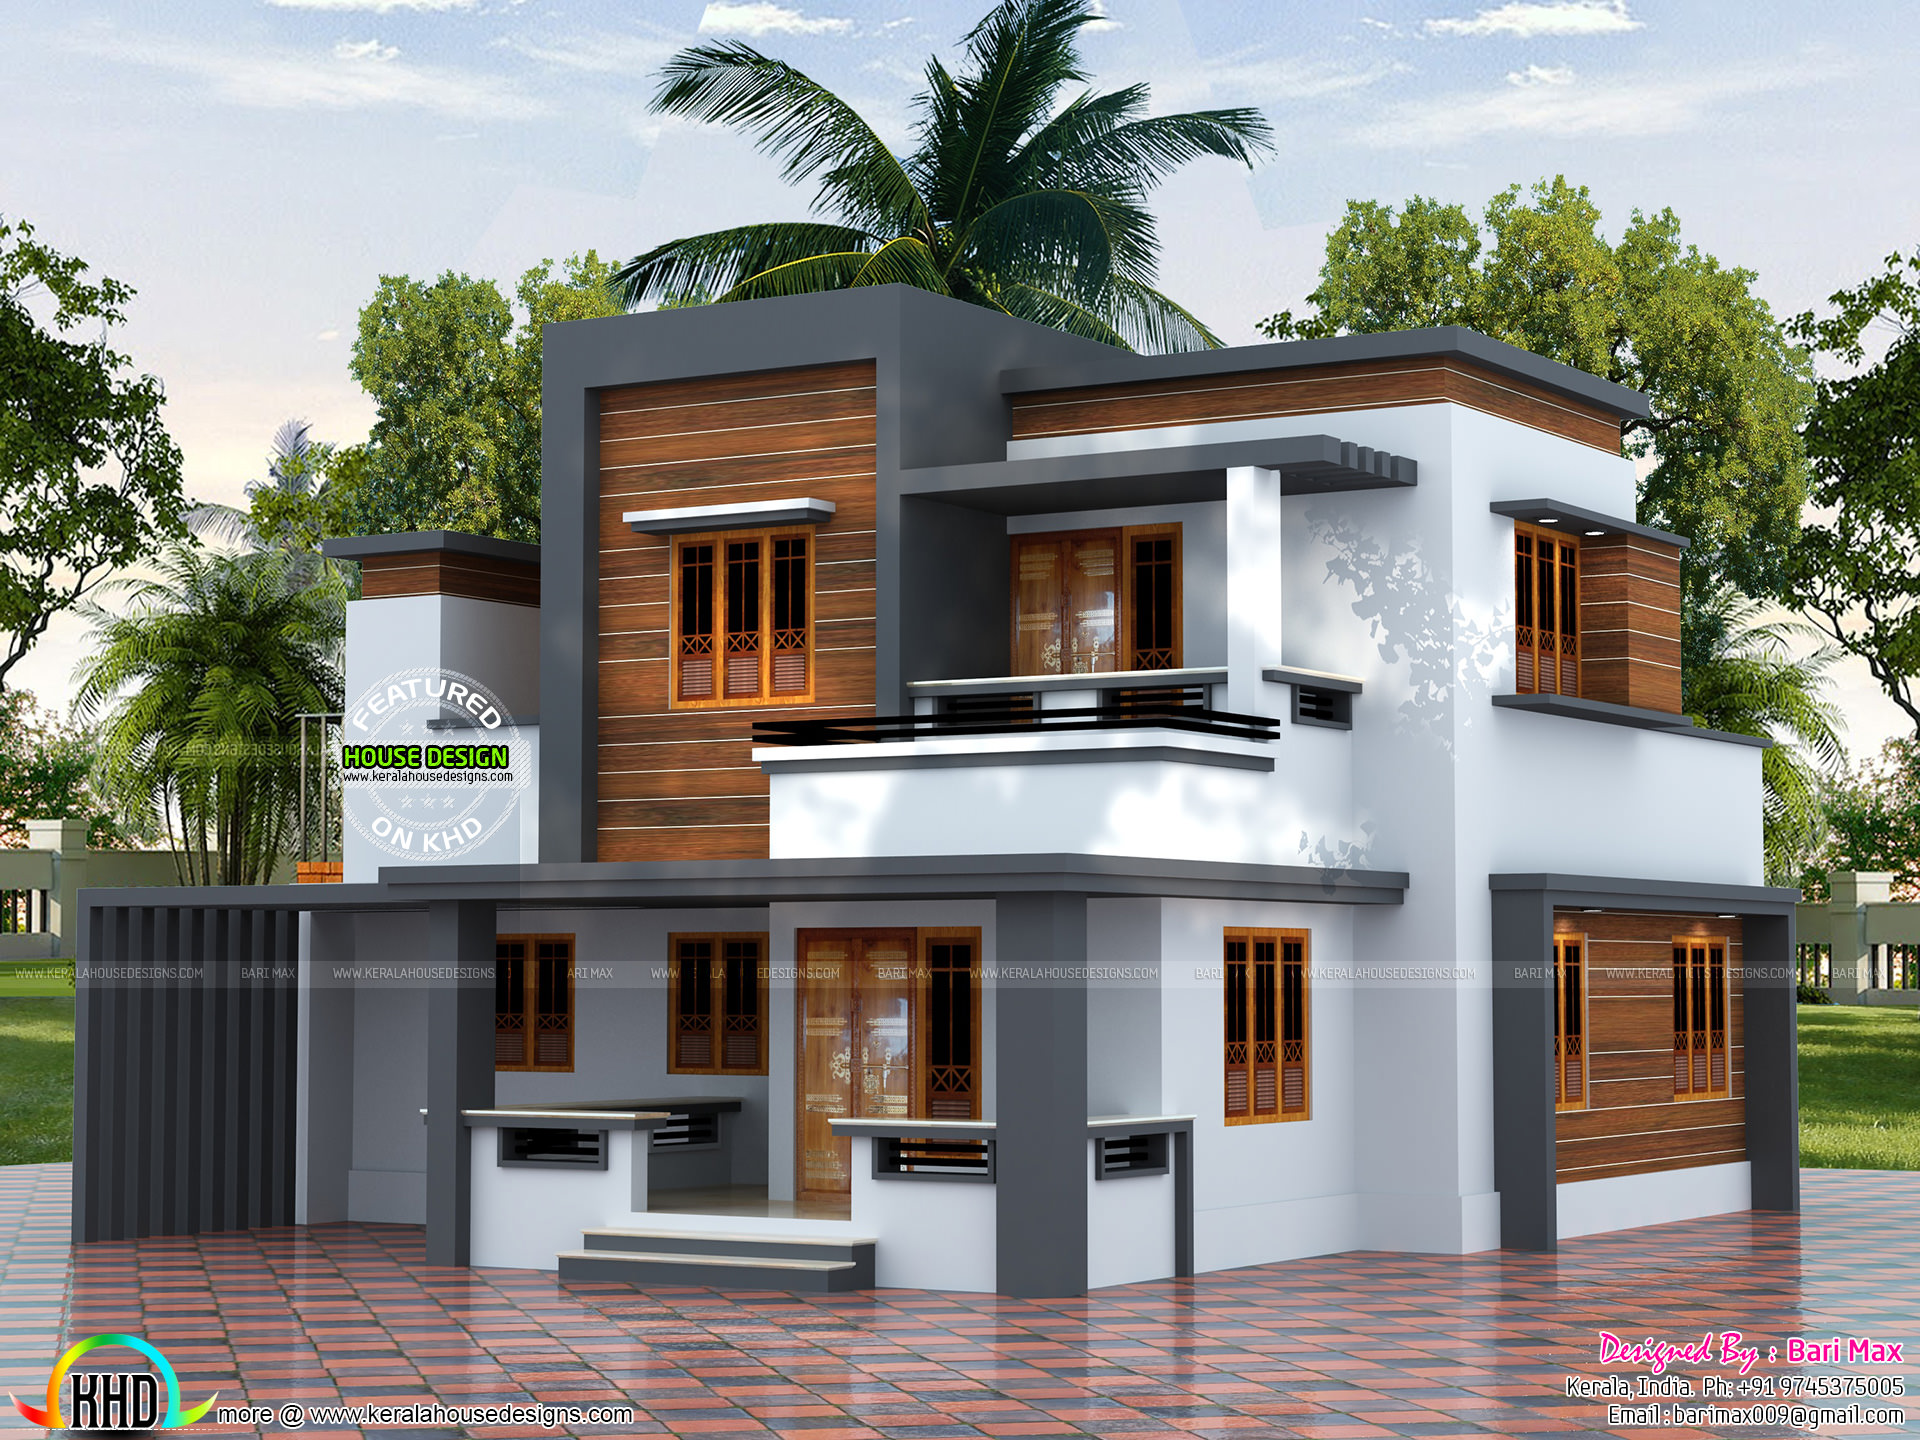  22 5 lakh cost  estimated  modern house  Kerala home  